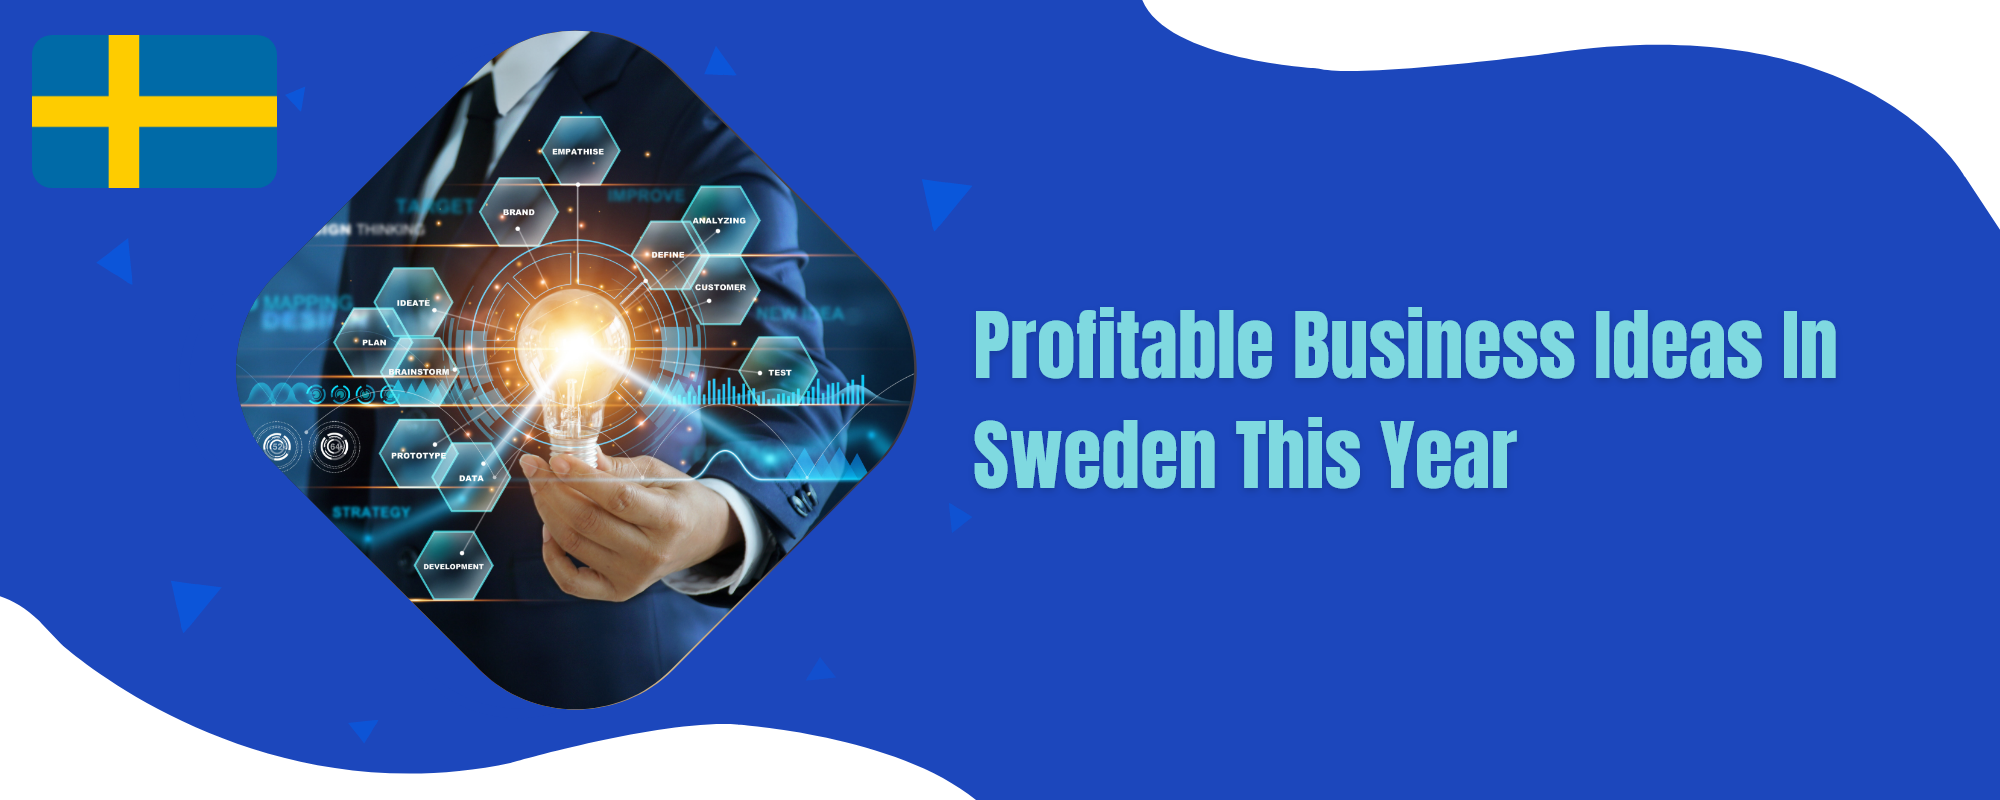 Profitable business ideas in Sweden